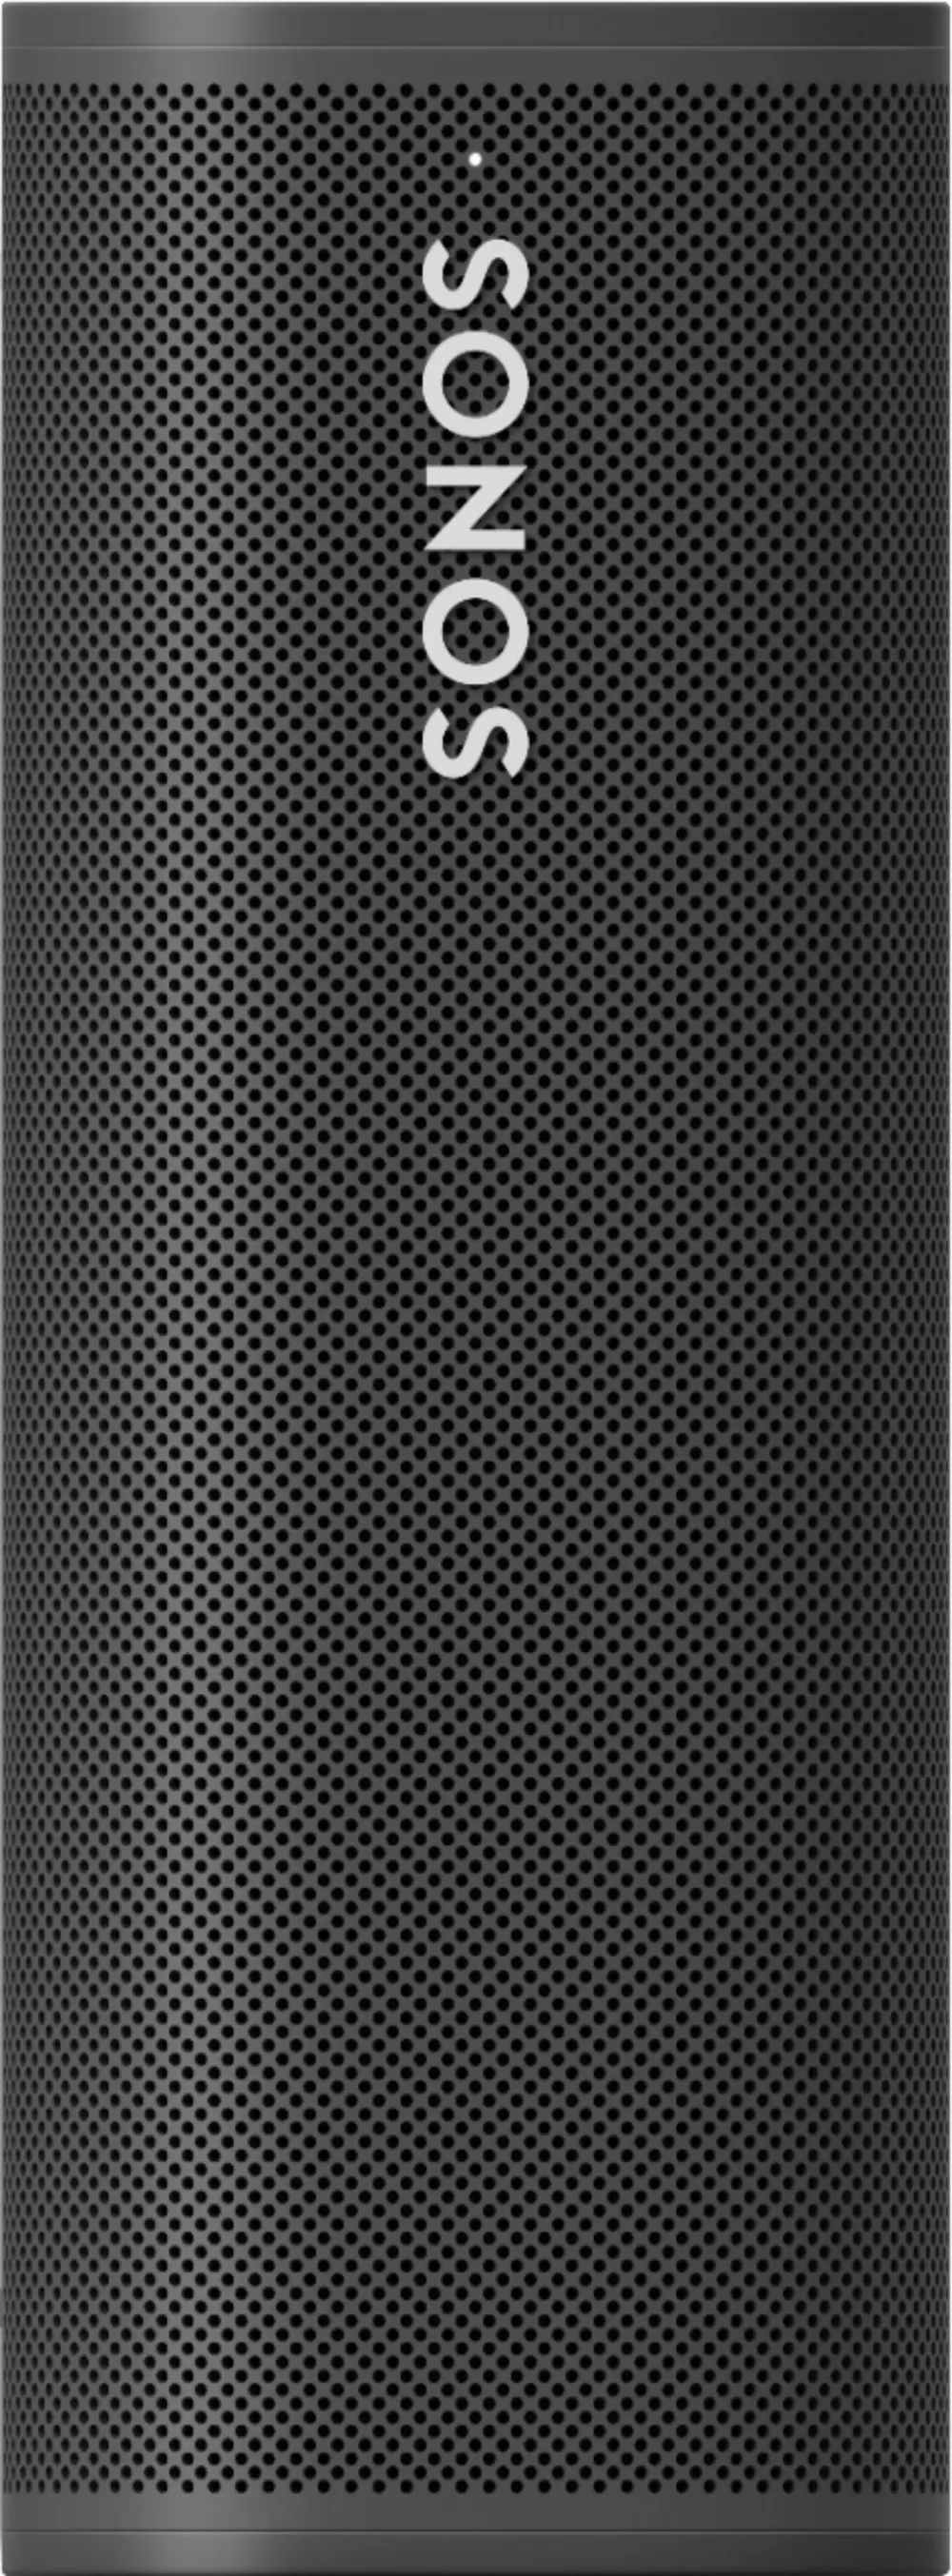 ROAM1USBLK Sonos Roam Black Waterproof Portable Speaker-1